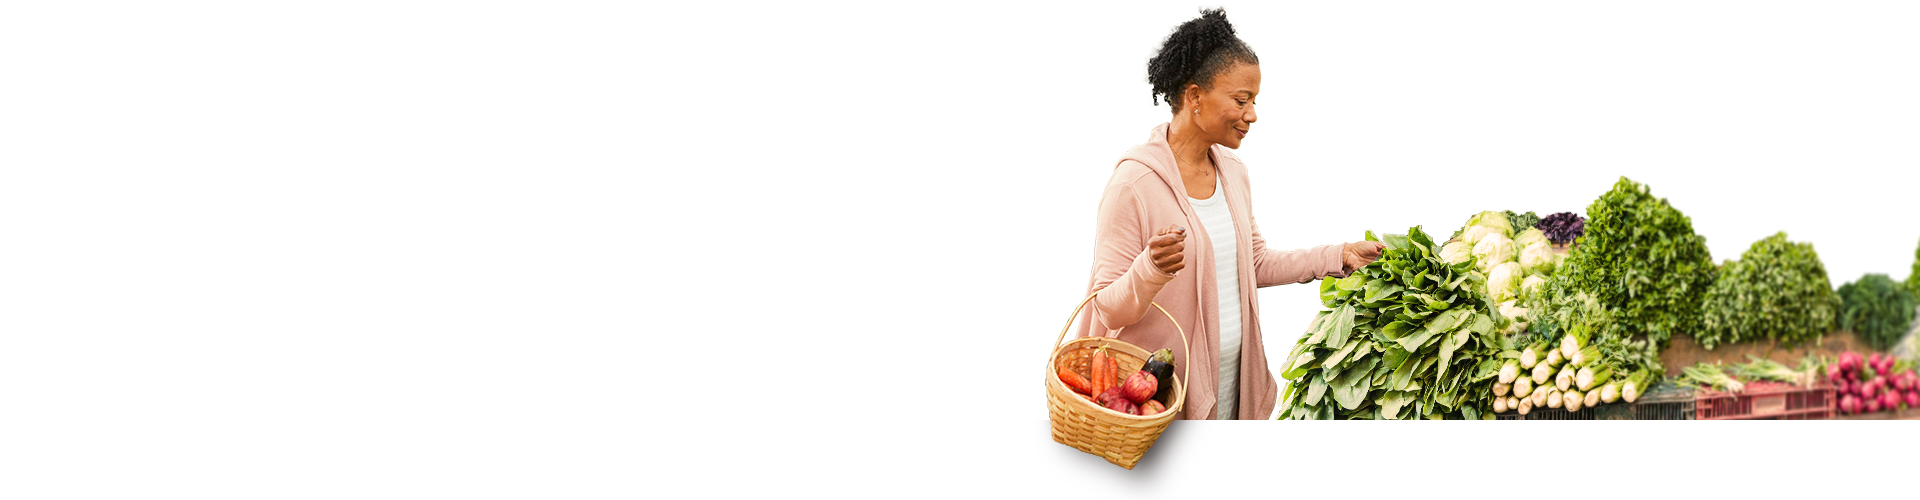 Woman in farmer’s market shopping for vegetables